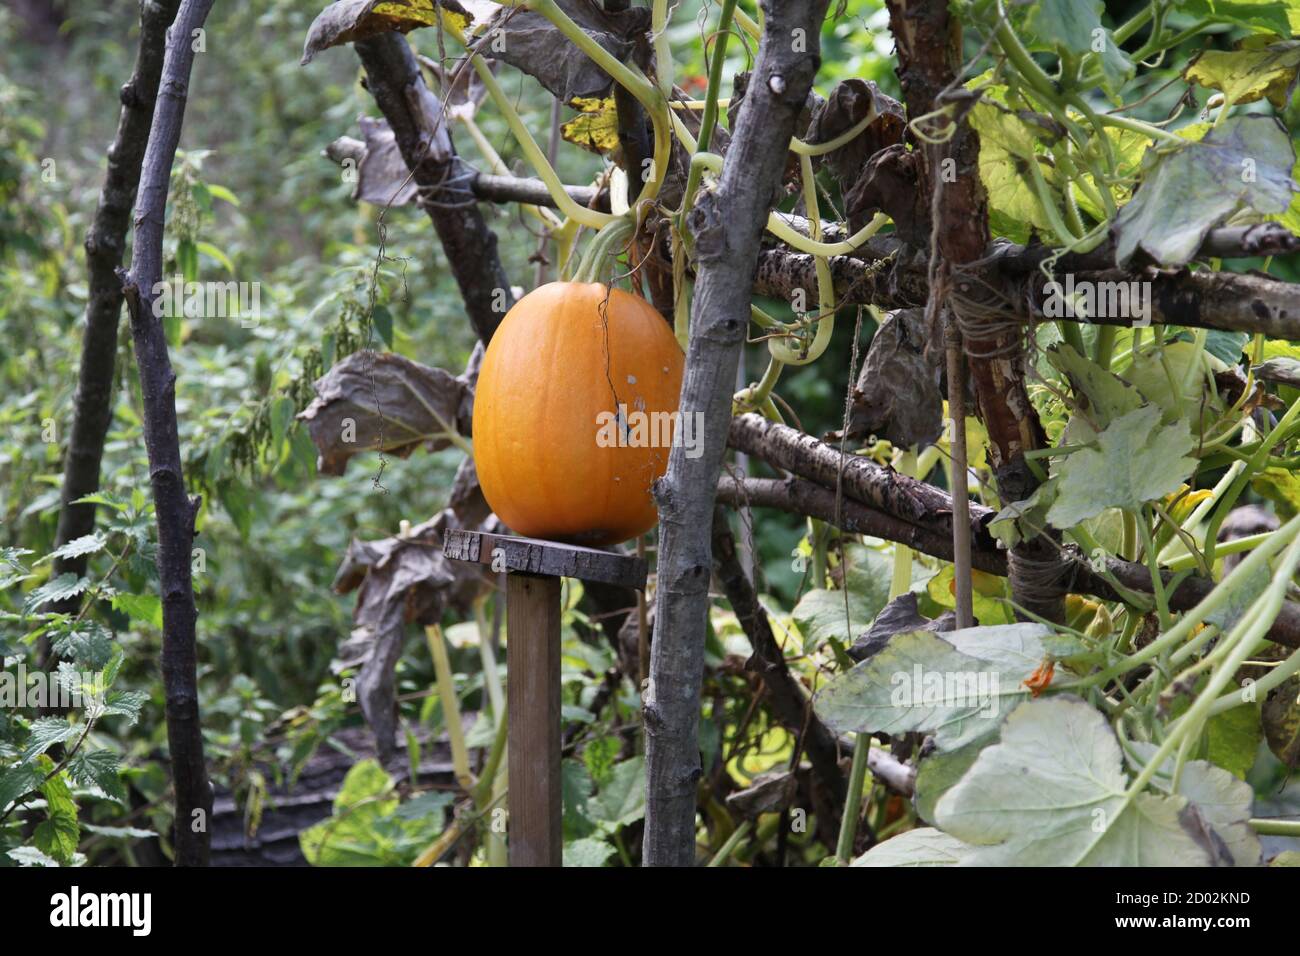 Large orange pumpkin growing on vine in community garden ready for ...